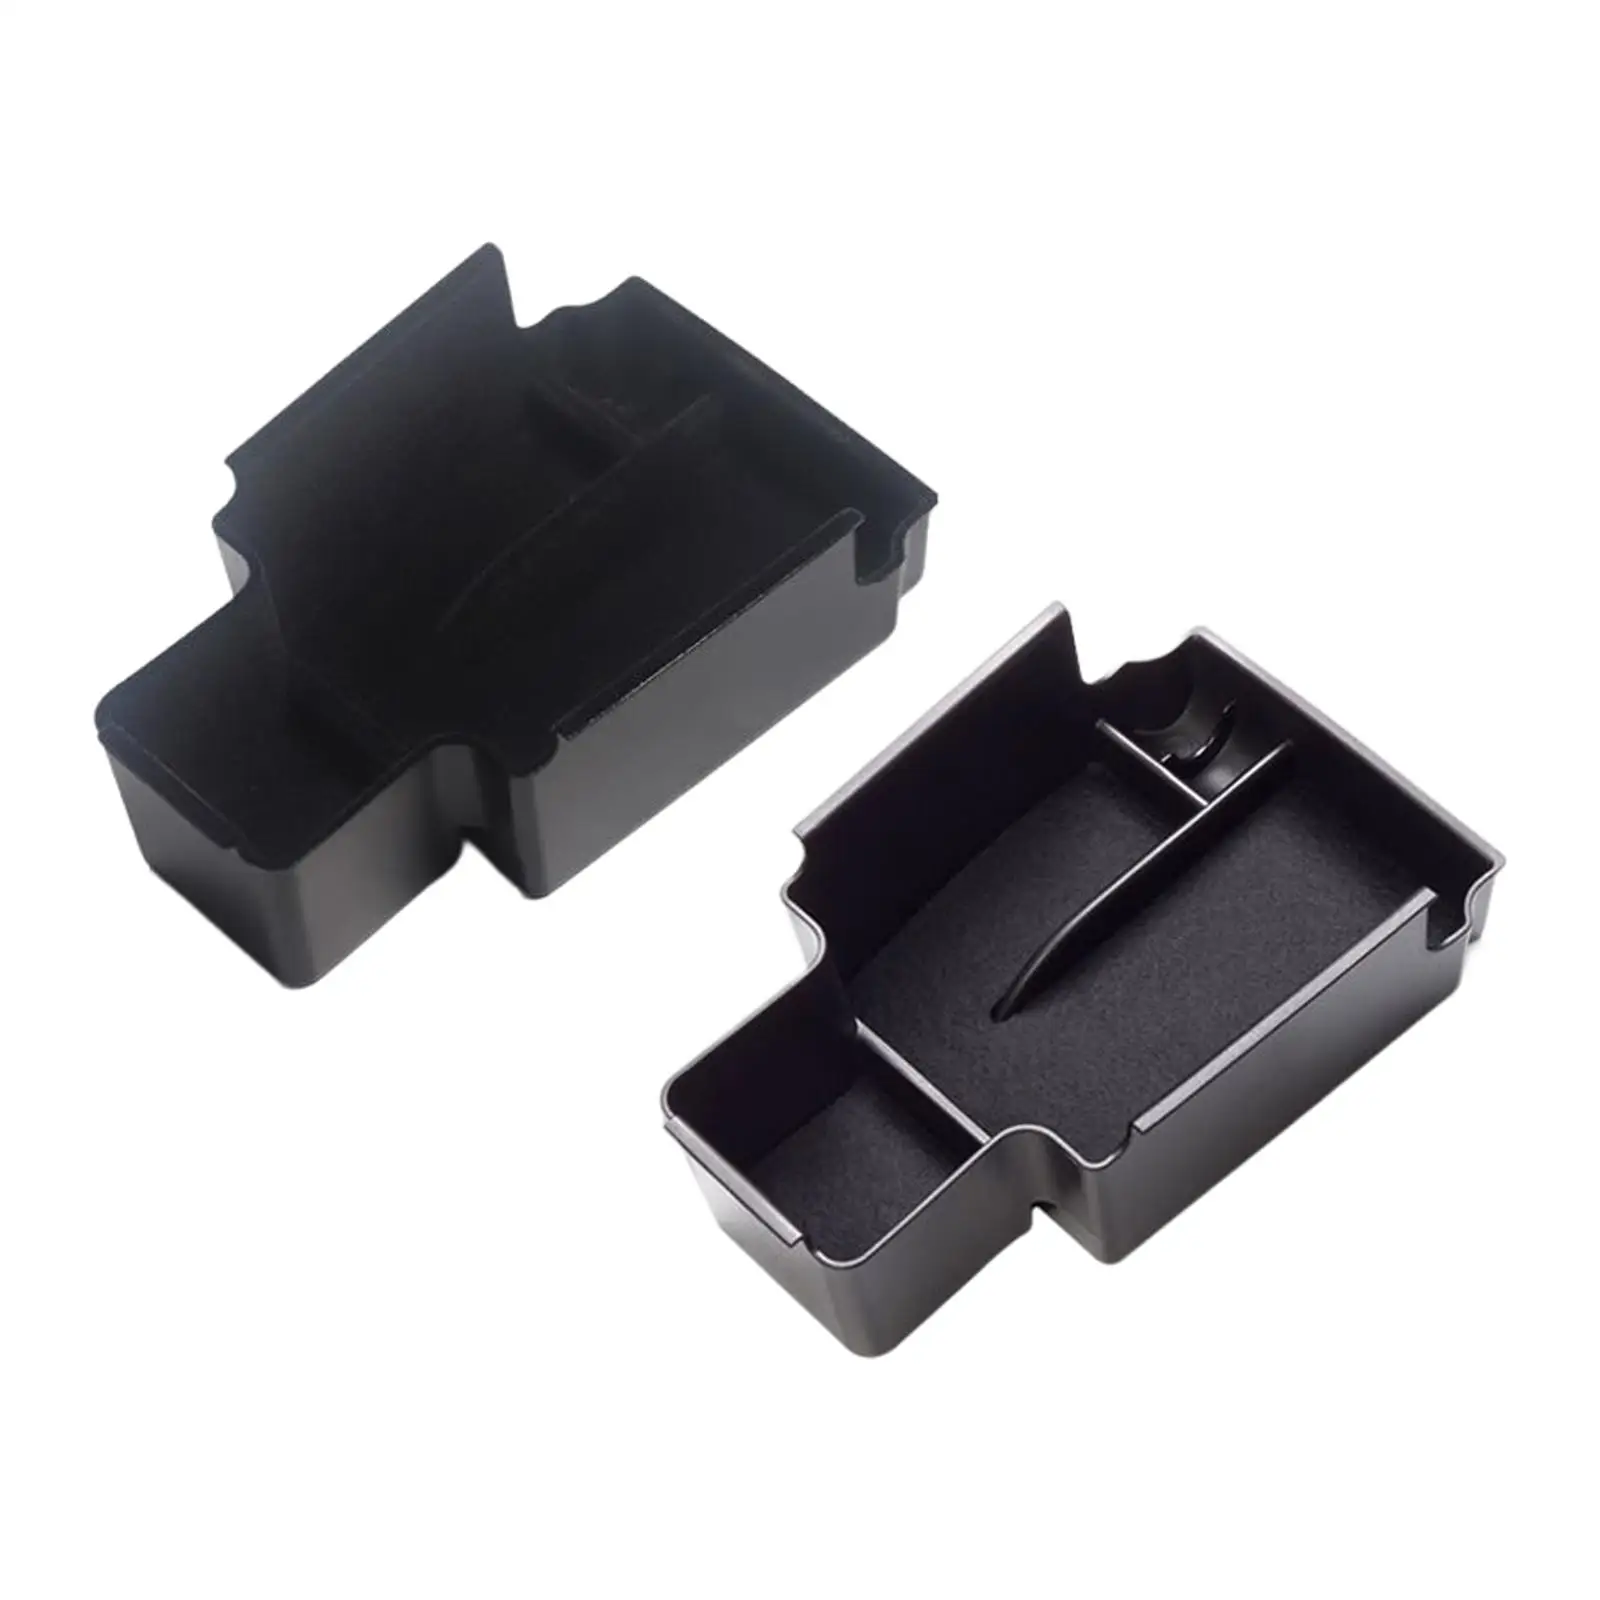 Car Center Console Armrest Storage Box Black Organizer Tray for Ora Gwm Good Cat Replacement High Quality